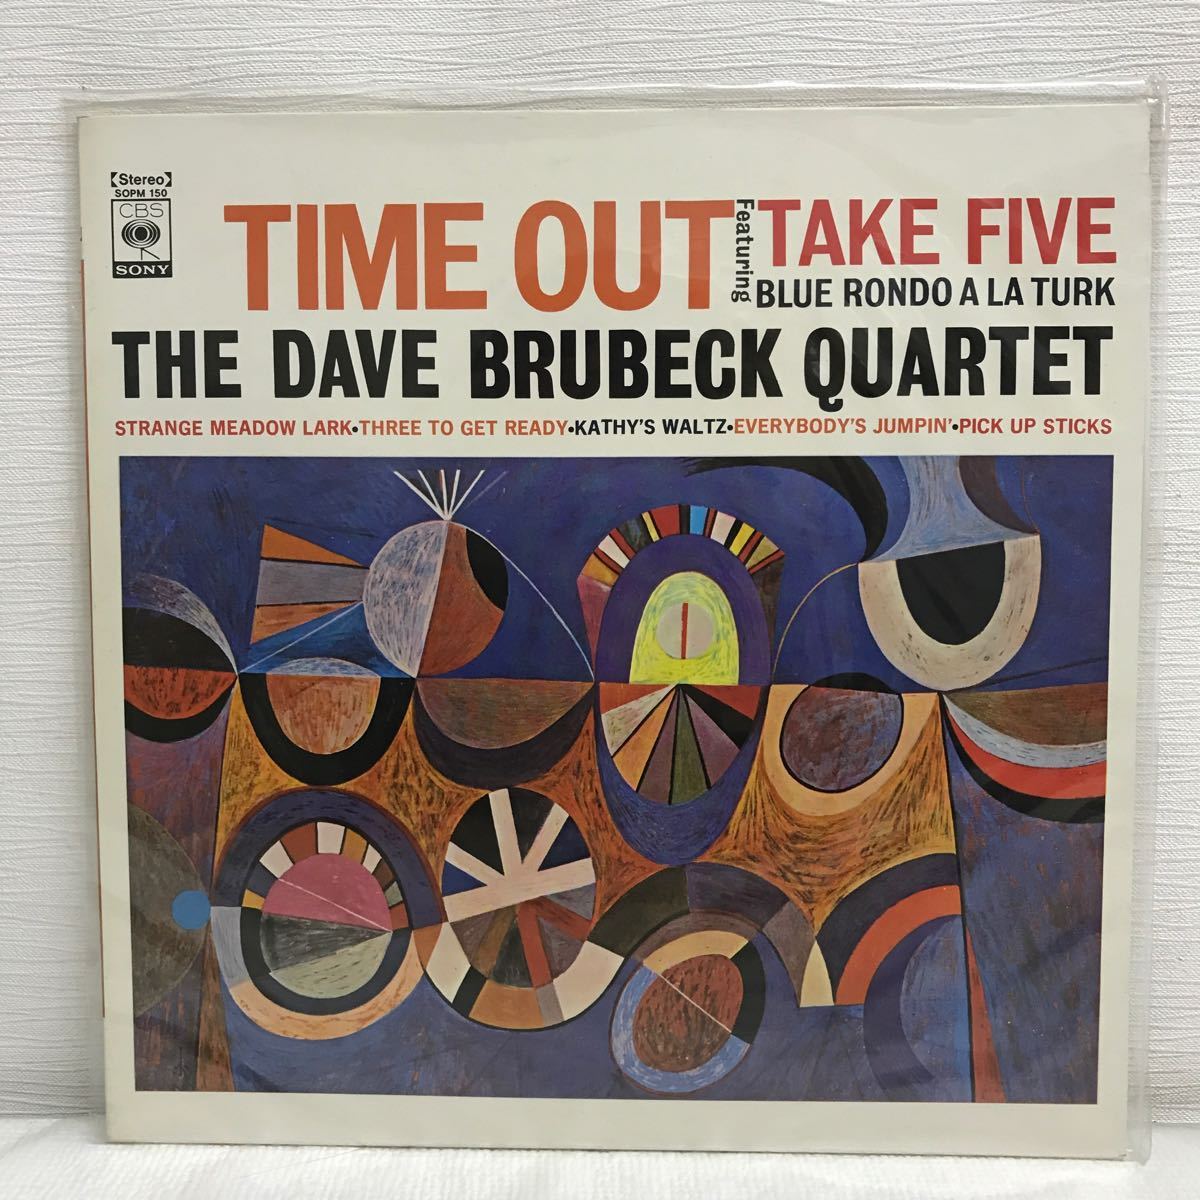 I0120B5 ザ・デイブ・ブルーベック・クヮルテット タイム・アウト LP レコード SOPM 150 ジャズ THE DAVE BRUBECK QUARTET TIME OUT_画像1